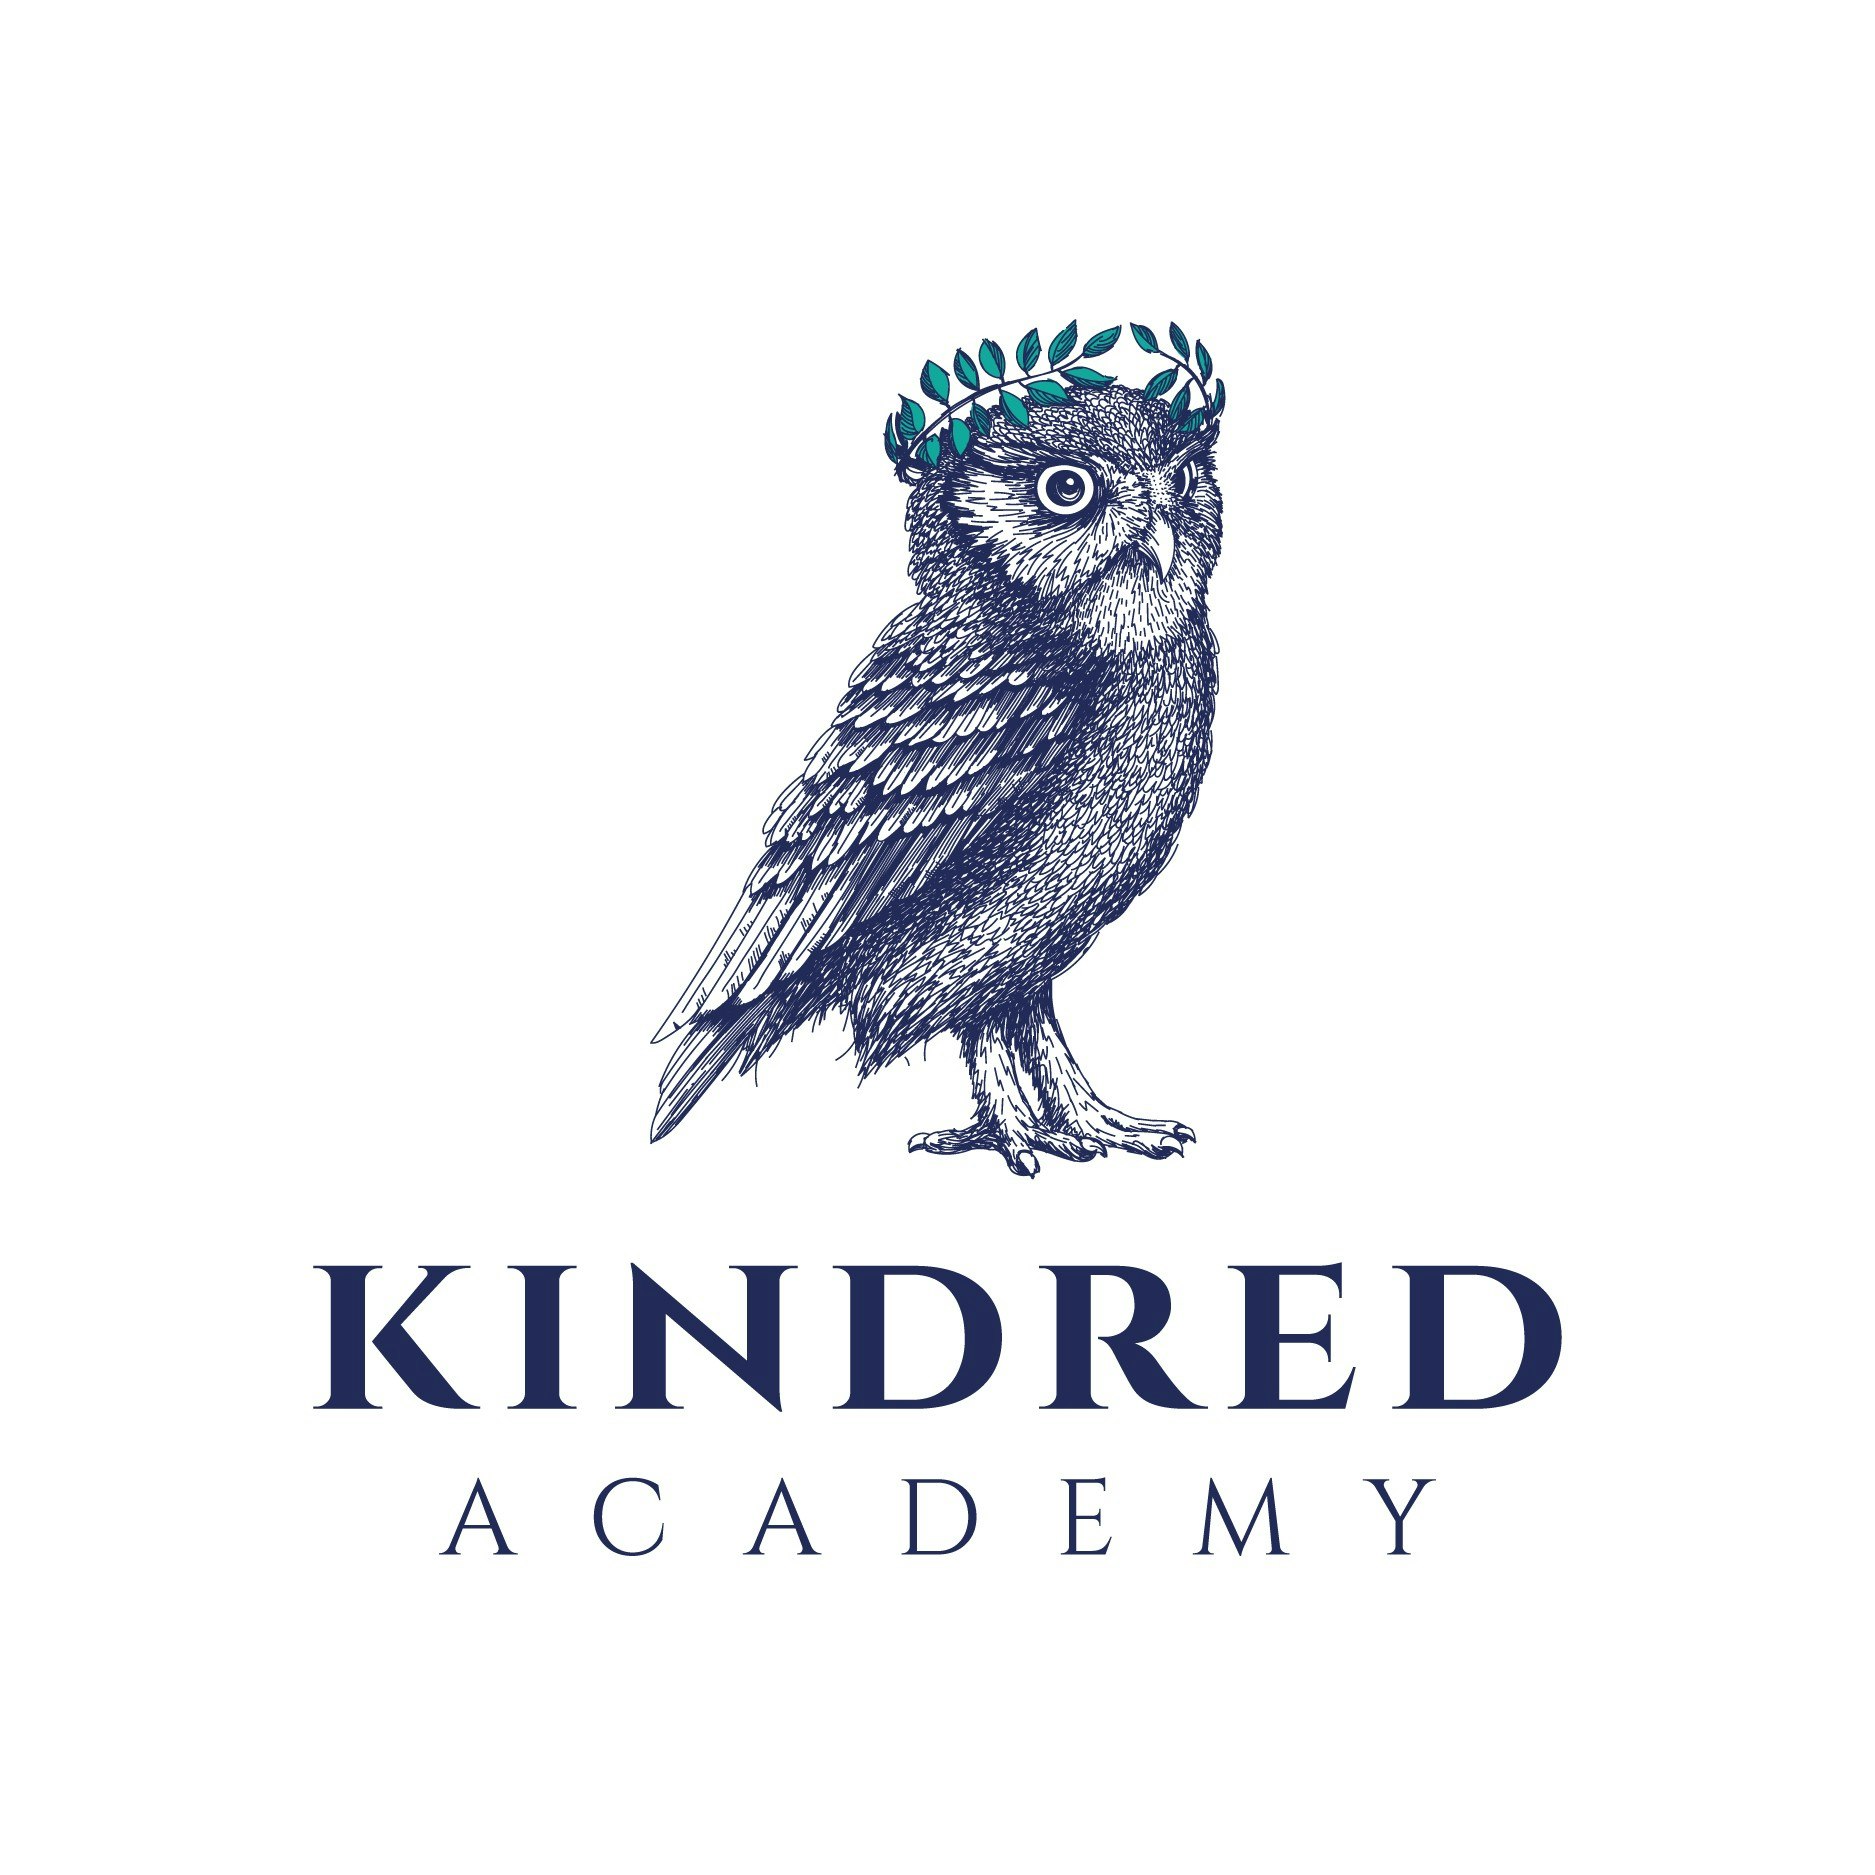 Kindred academy logo sowy